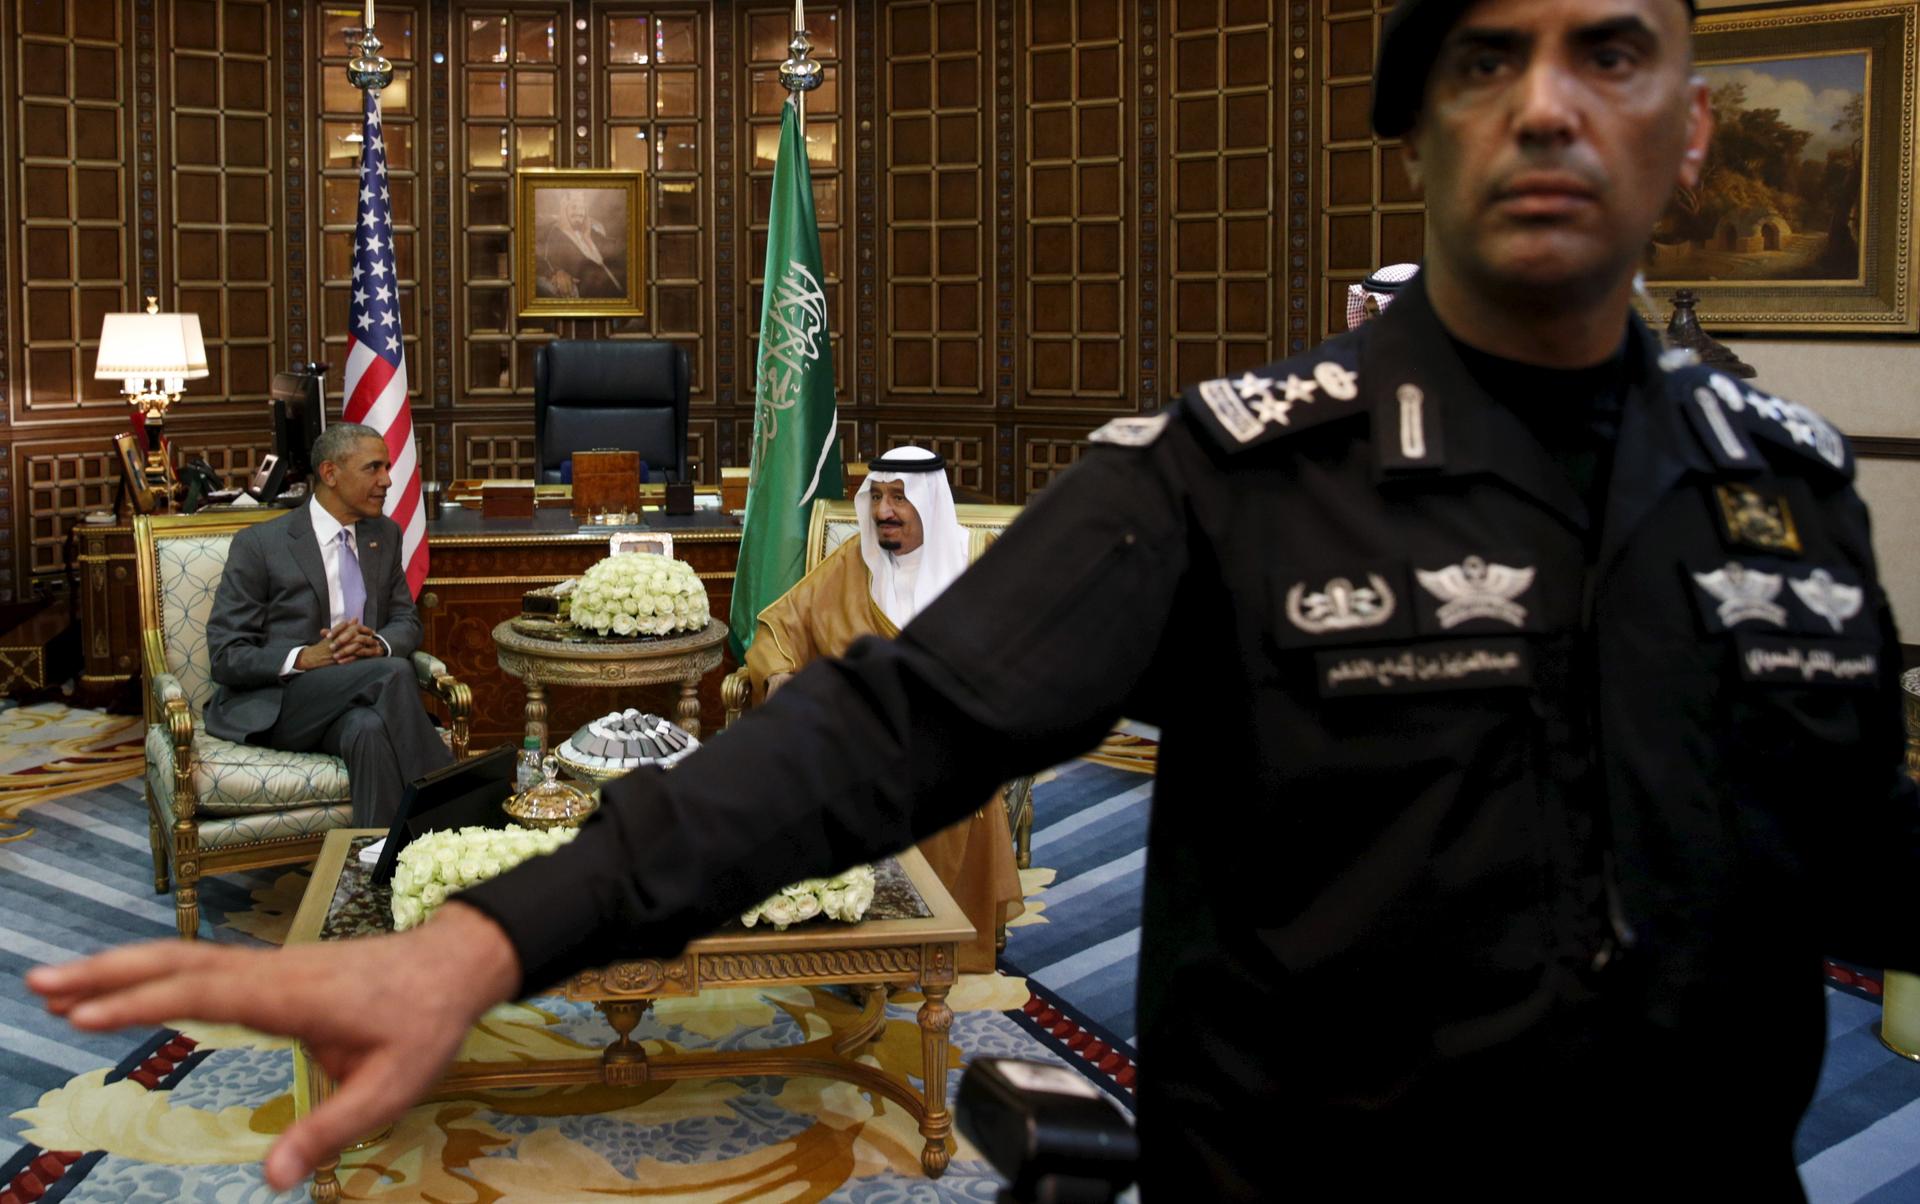 A guard ushers away photographers as President Barack Obama meets with Saudi King Salman in Riyadh, Saudi Arabia April 20, 2016